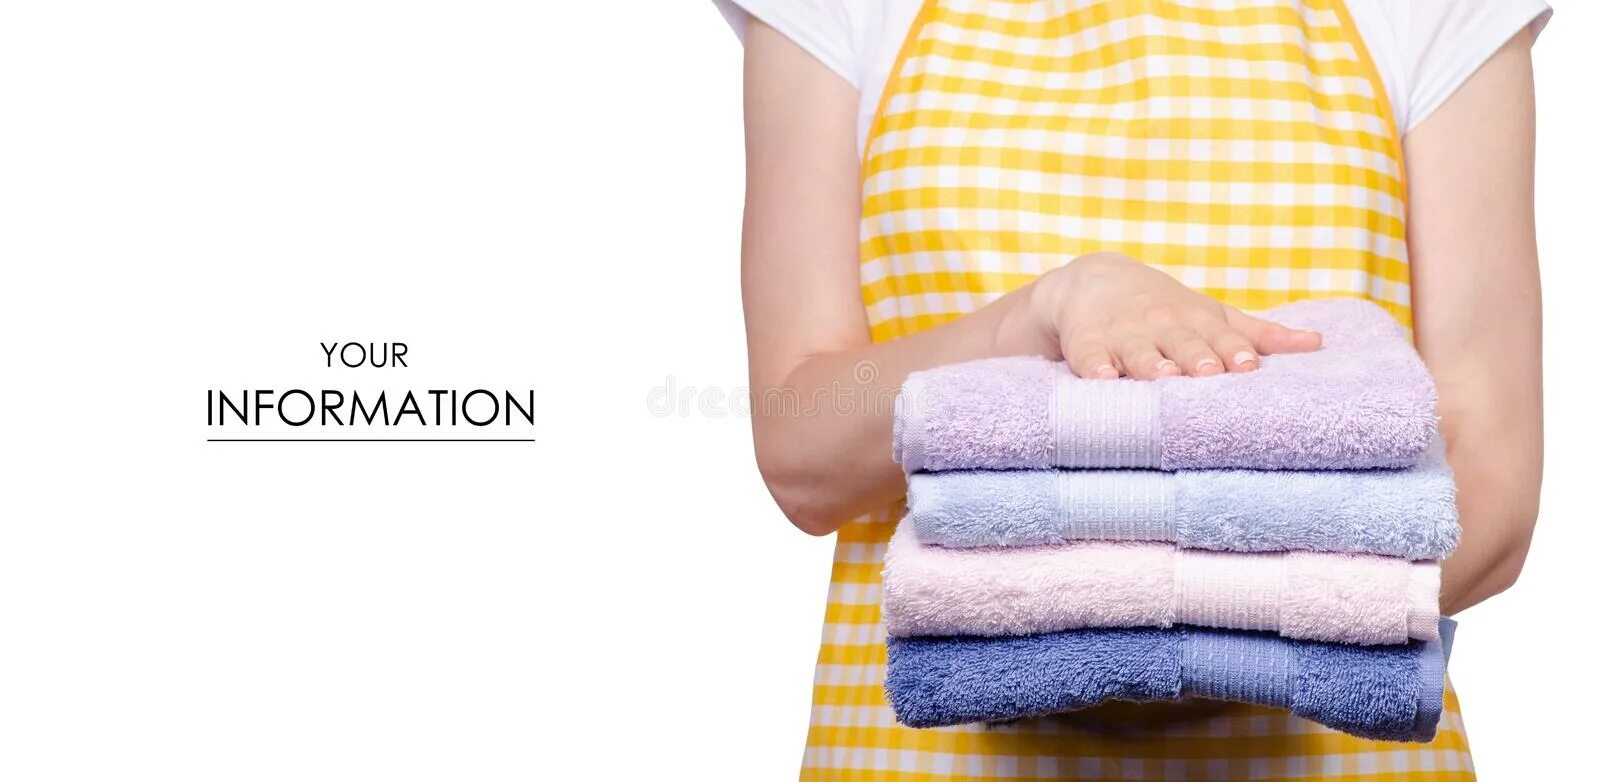 Стянули полотенце. Полотенце для рук. Женщина с полотенцем в руках. Девушка в полотенце. Девушка держит в руках полотенце.